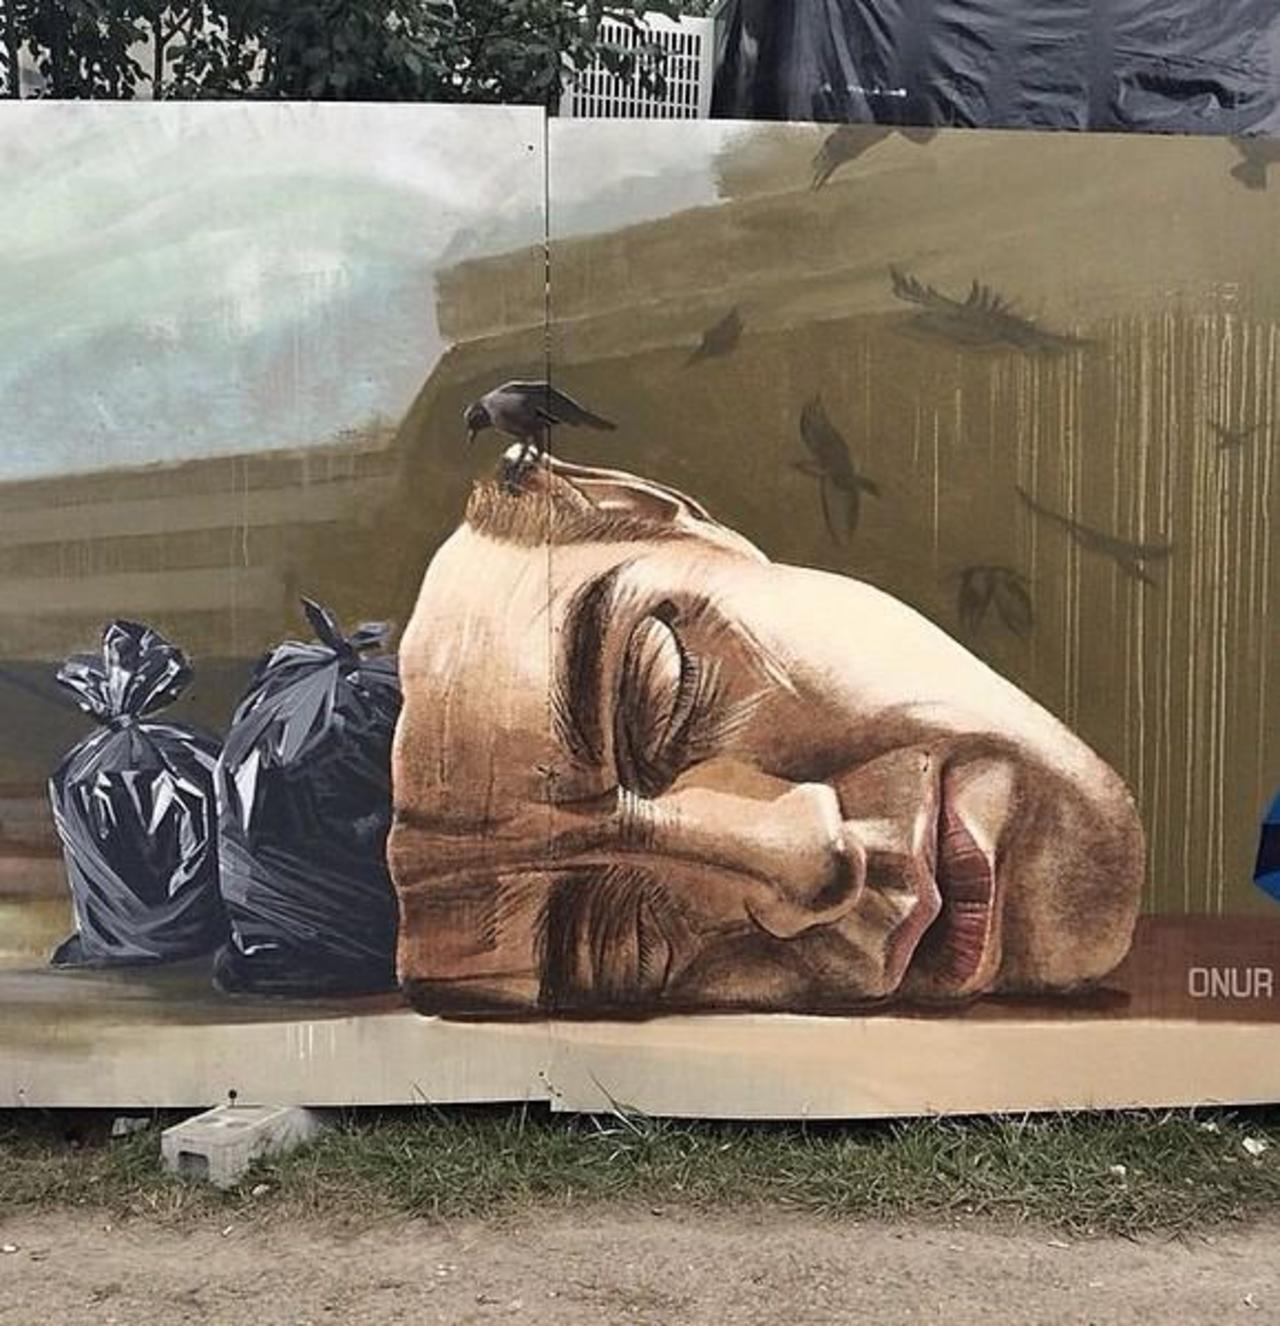 dirty thoughts in your head RT @GoogleStreetArt “Artist ONUR Biel, Switzerland #art #graffiti #mural #streetart http://t.co/9Nijt6ToXE”